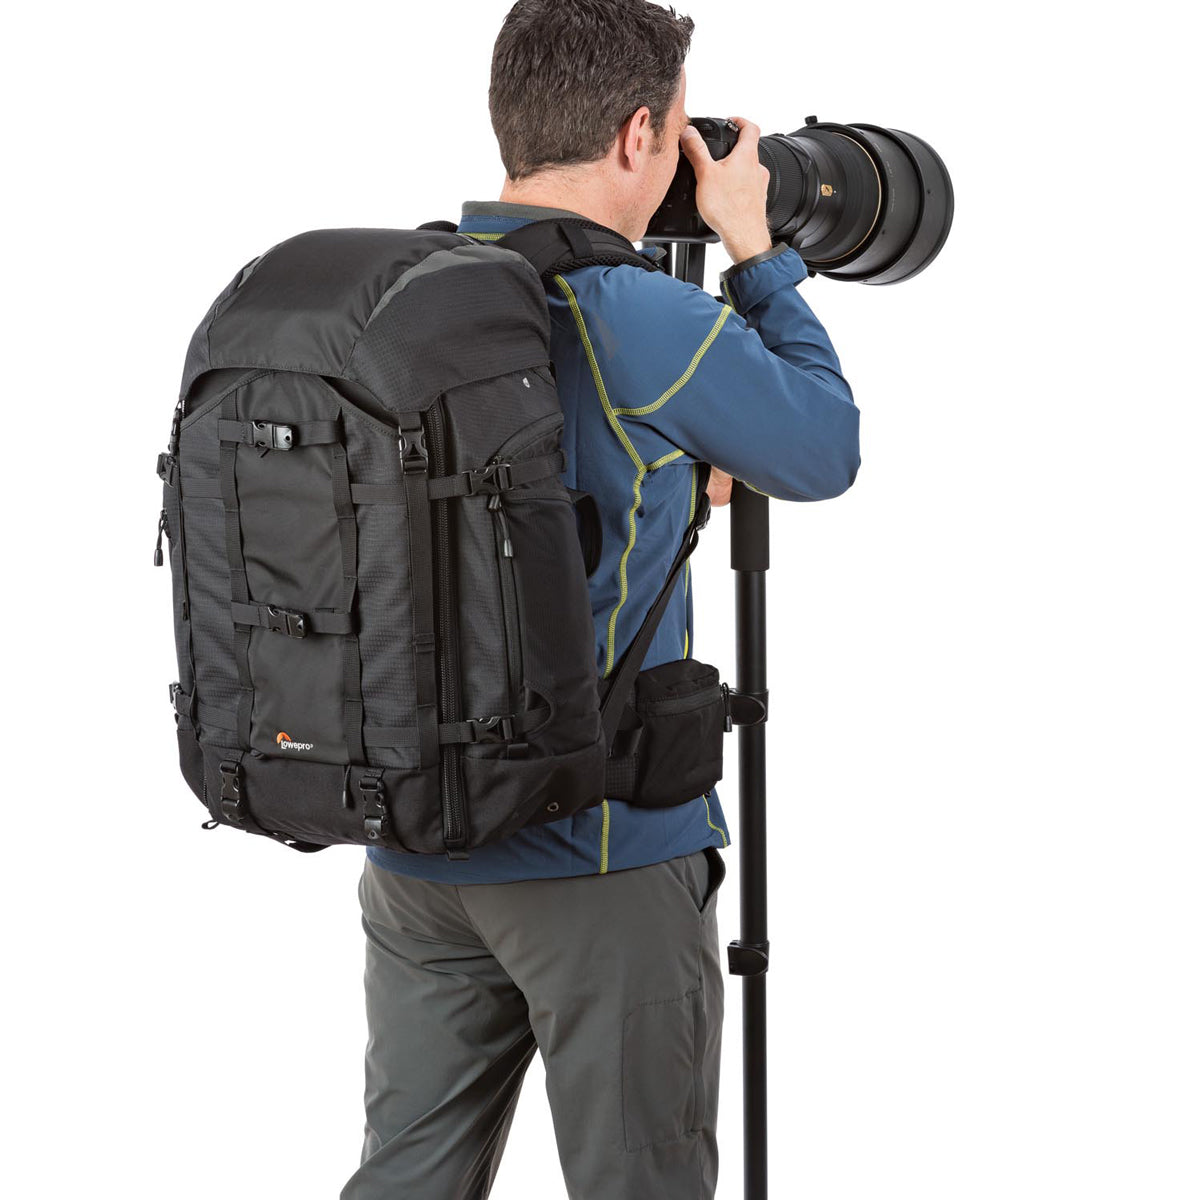 Lowepro Pro Trekker 450 AW Camera Backpack